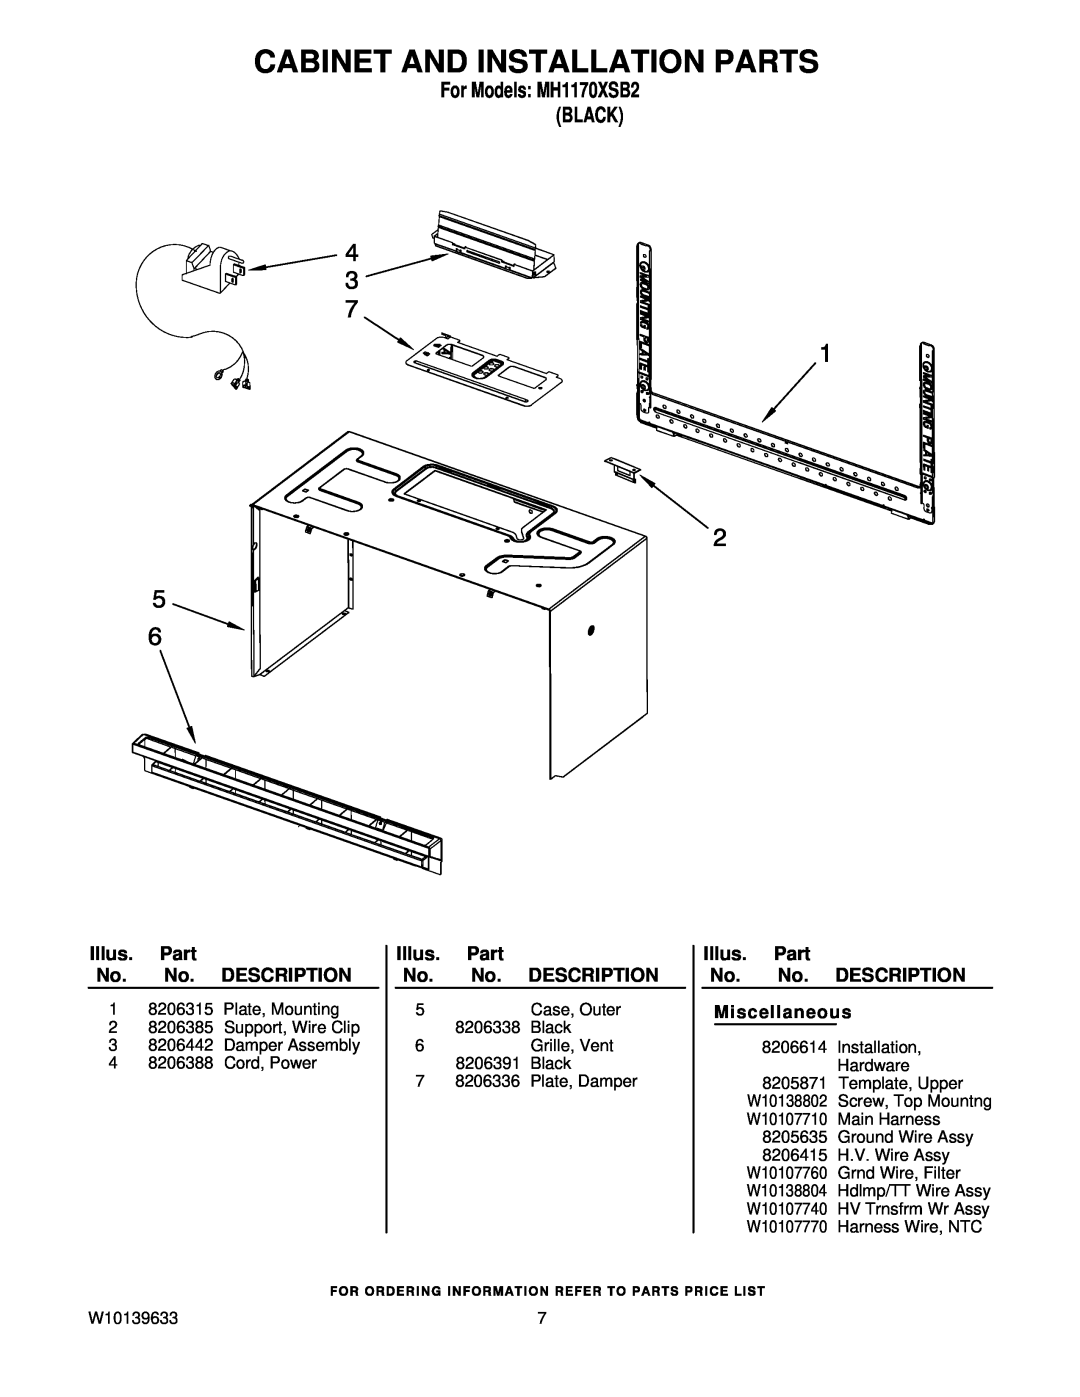 Whirlpool MH1170XSB2 manual Cabinet And Installation Parts, Illus. Part No. No. DESCRIPTION Miscellaneous 